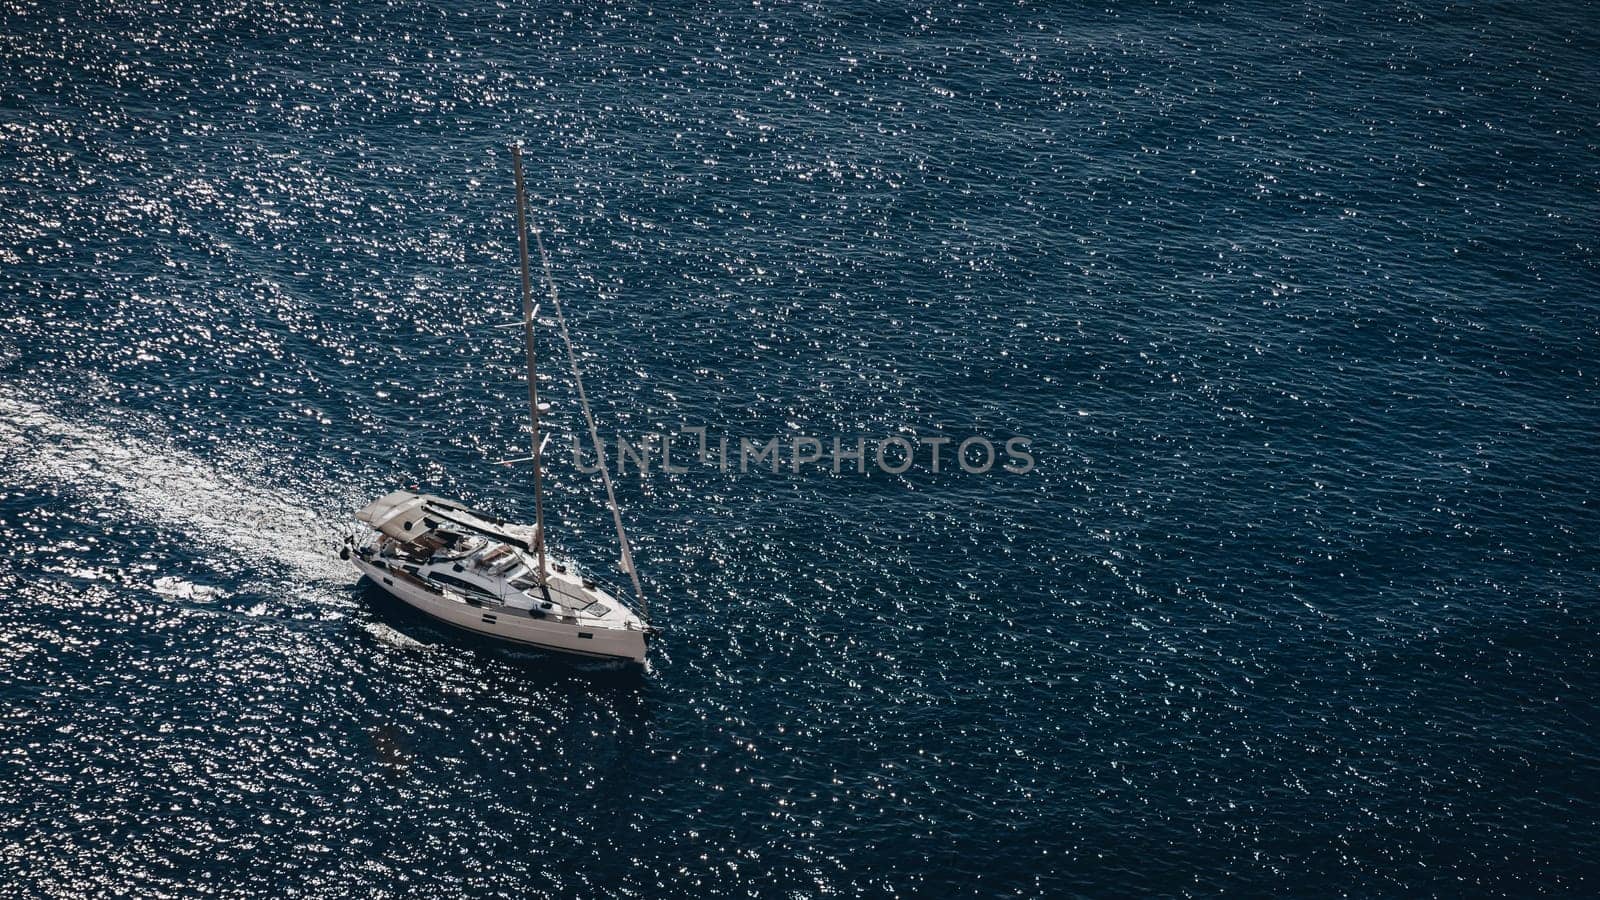 Aerial view of luxury floating ship in Adriatic Sea, Croatia by Popov